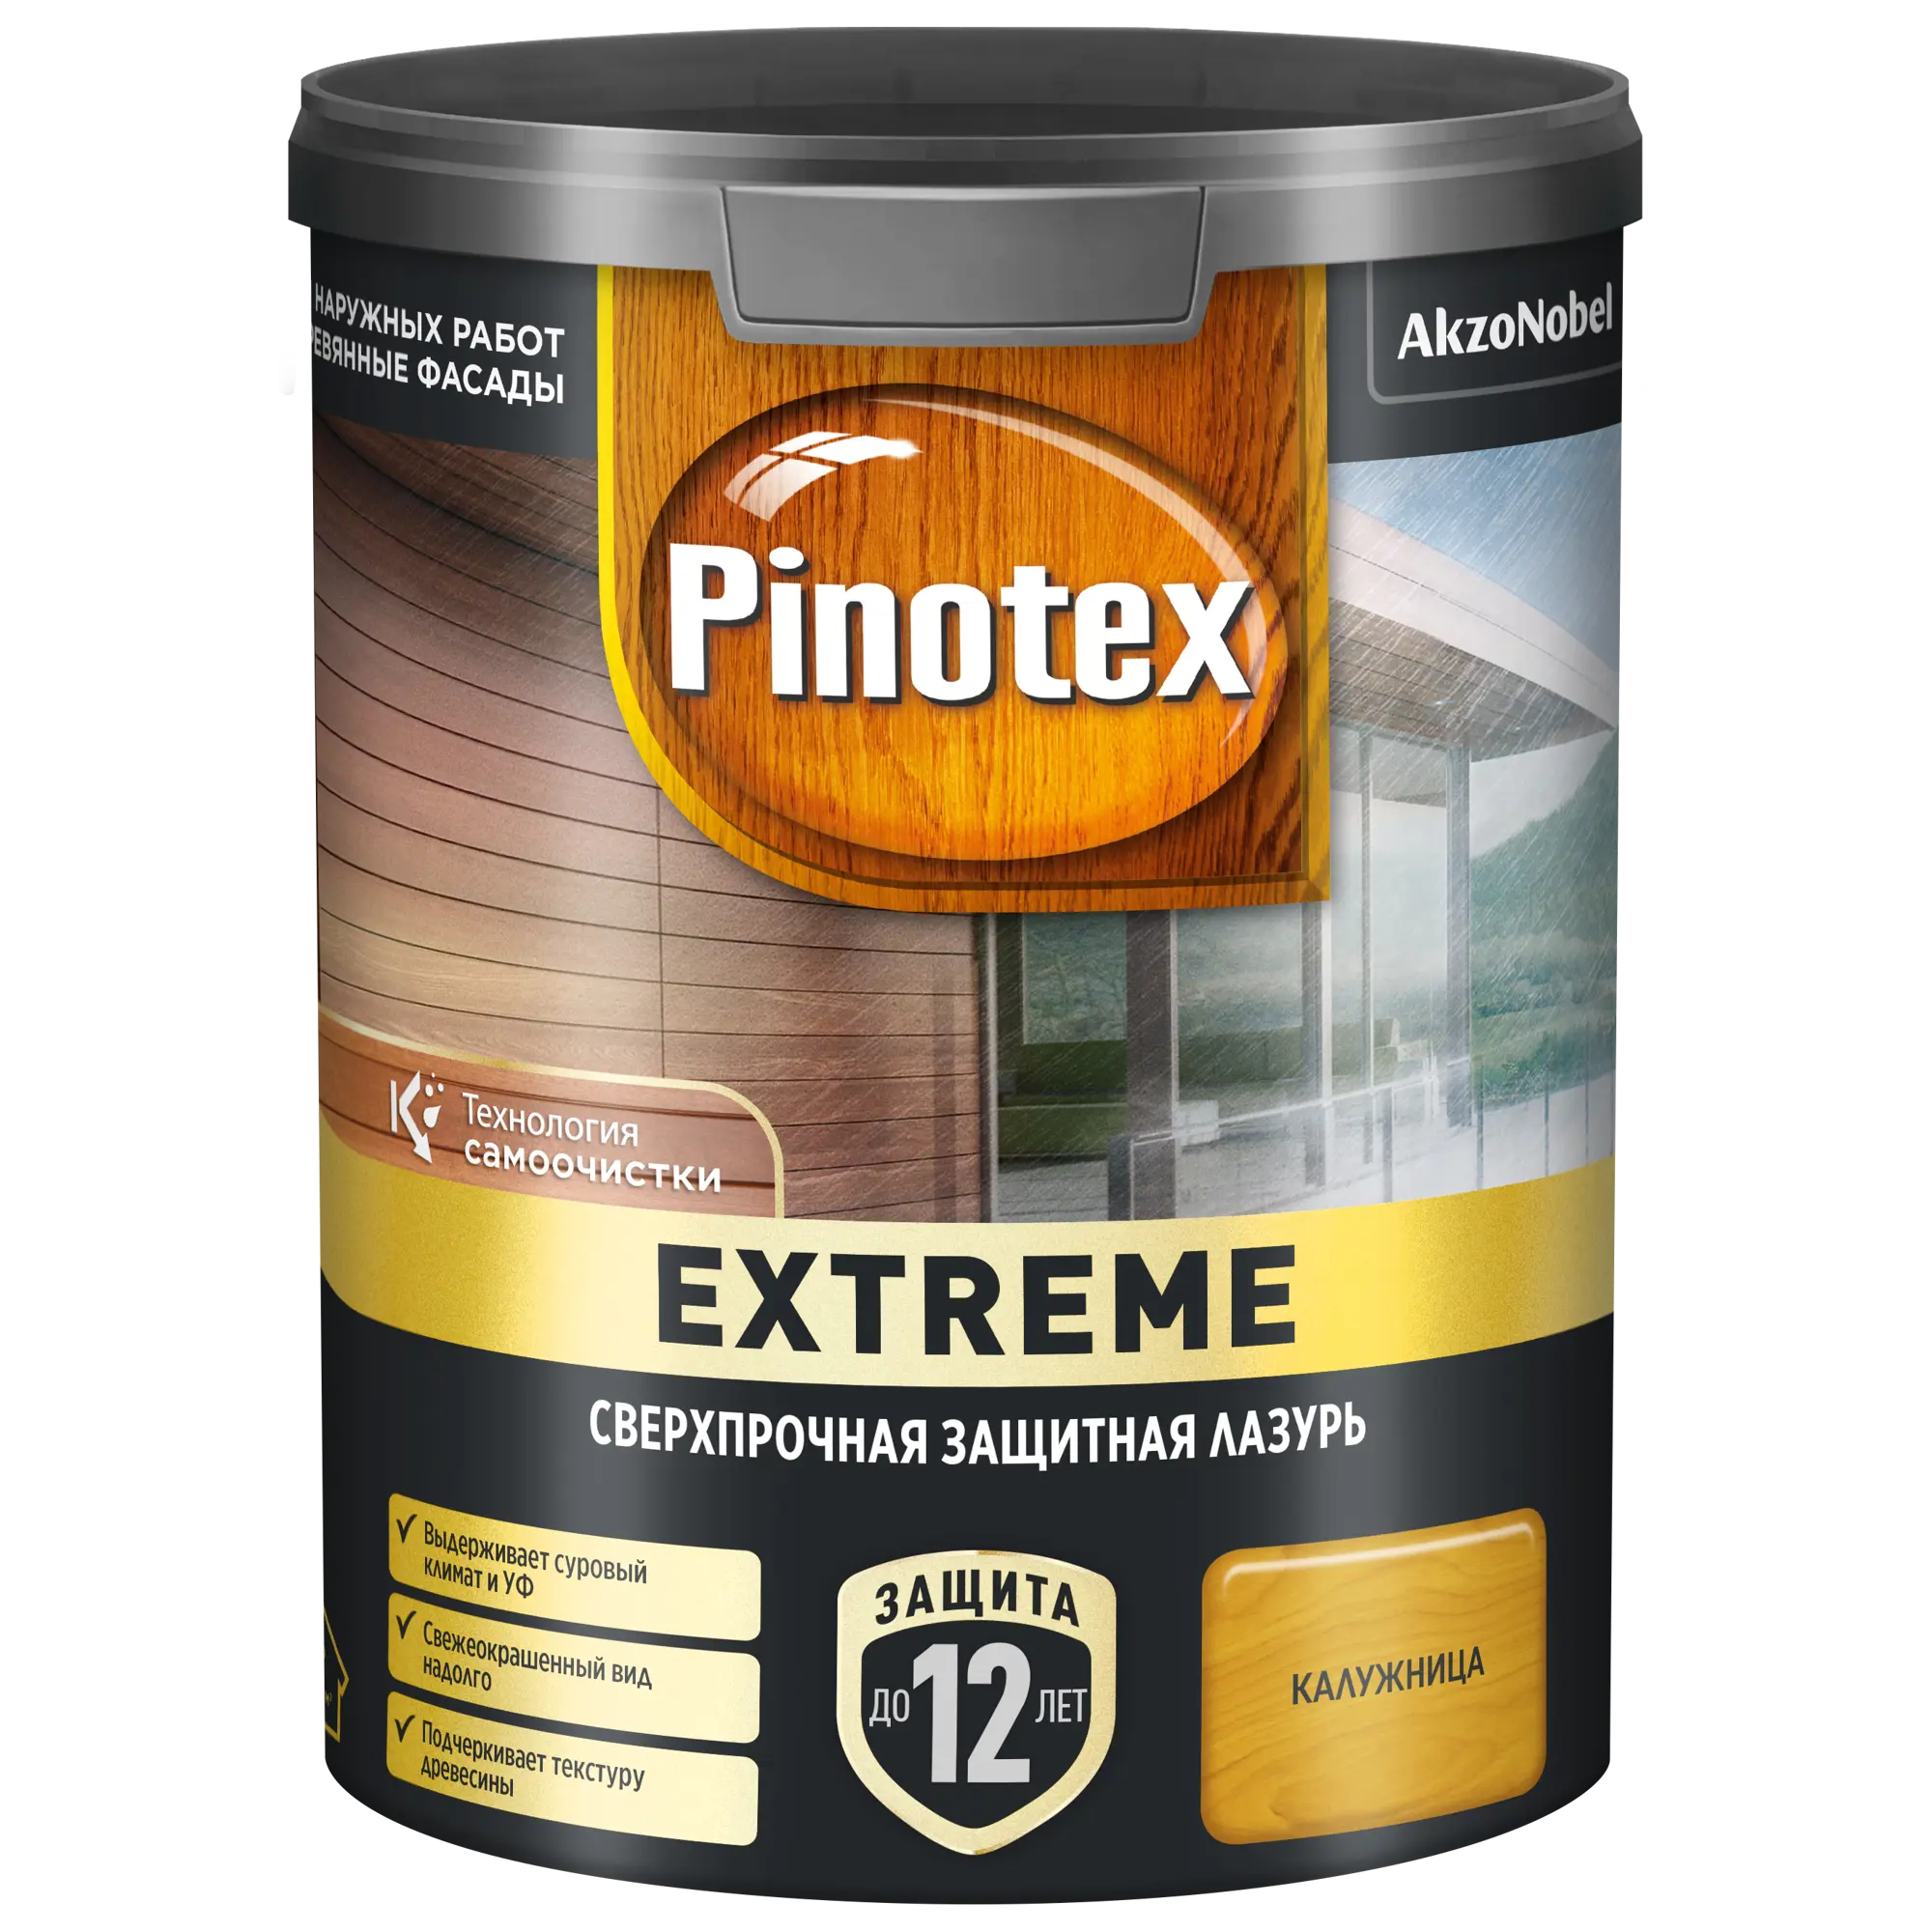 Лазурь для дерева Pinotex Extreme калужница, 0,9 л